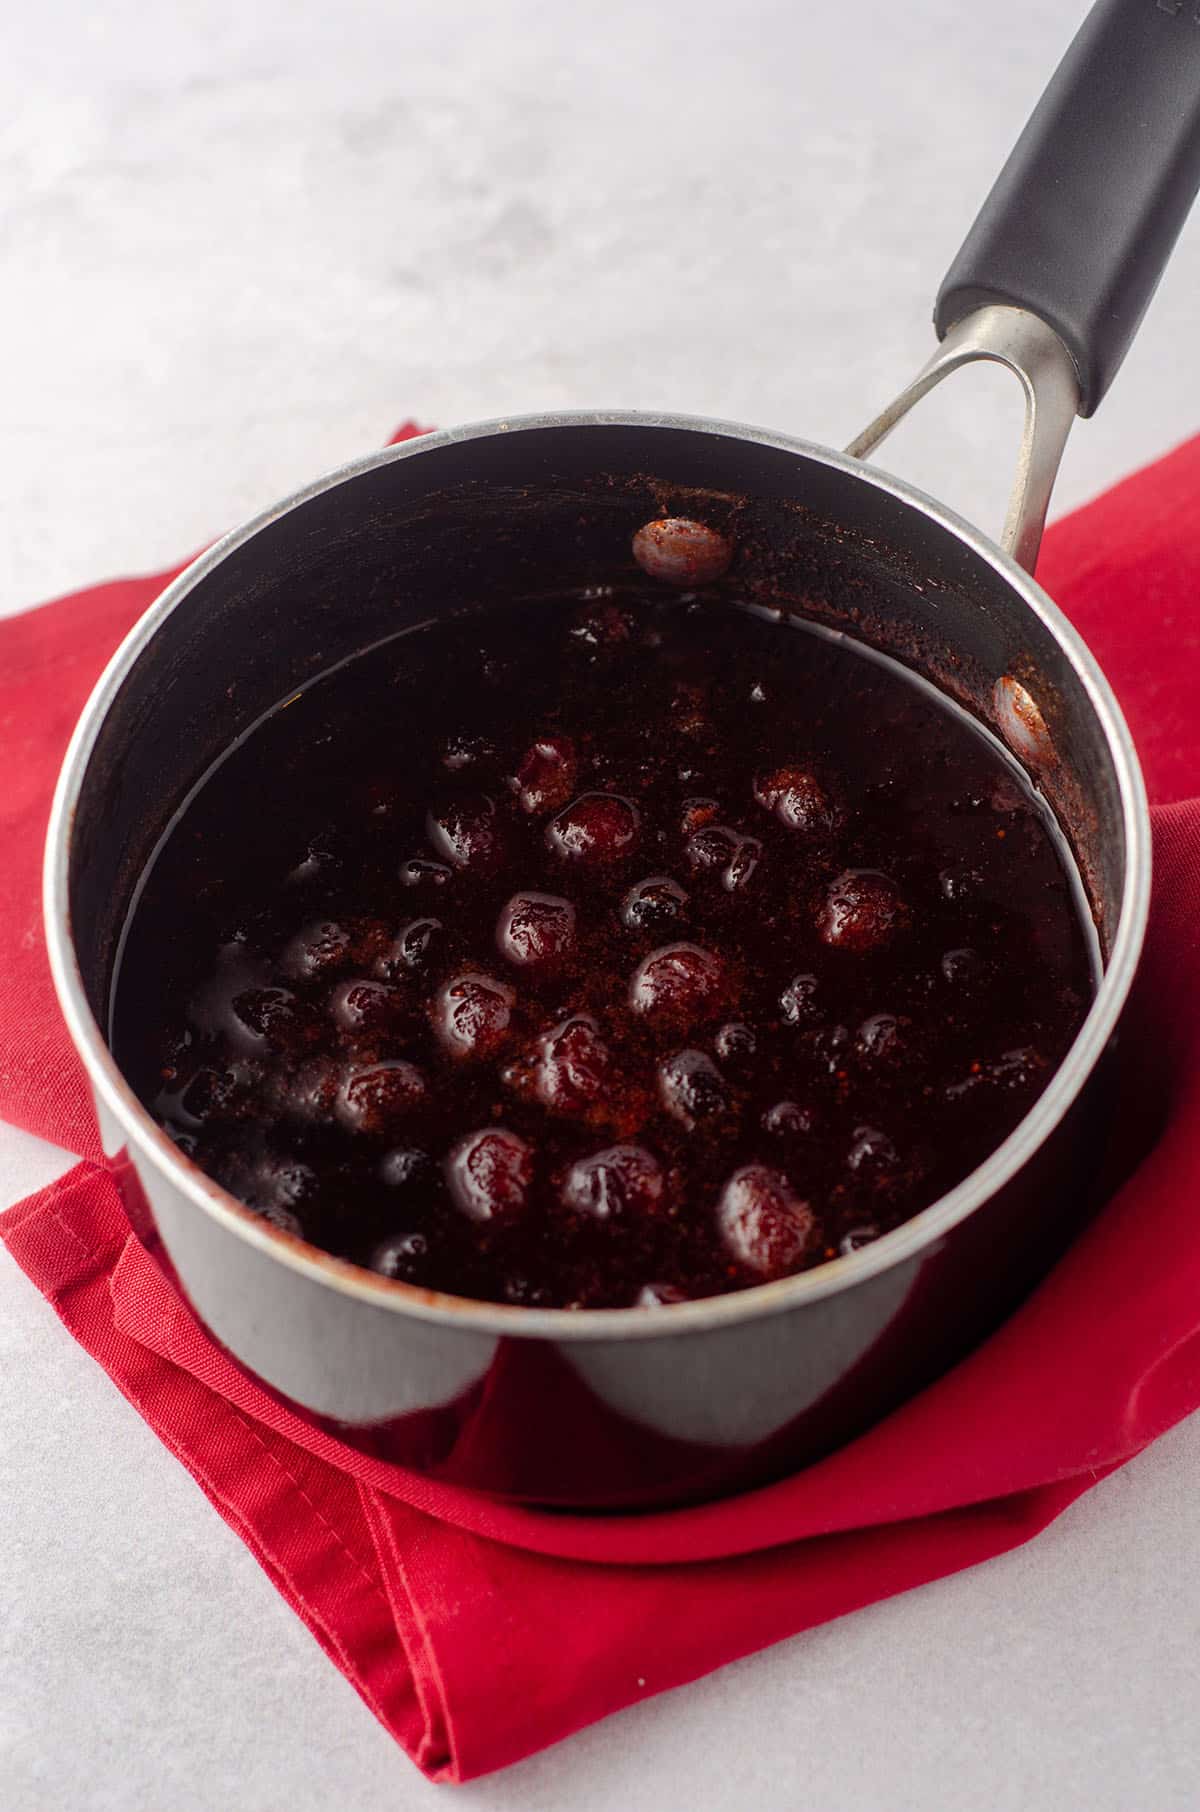 macerated cranberries in a saucepan